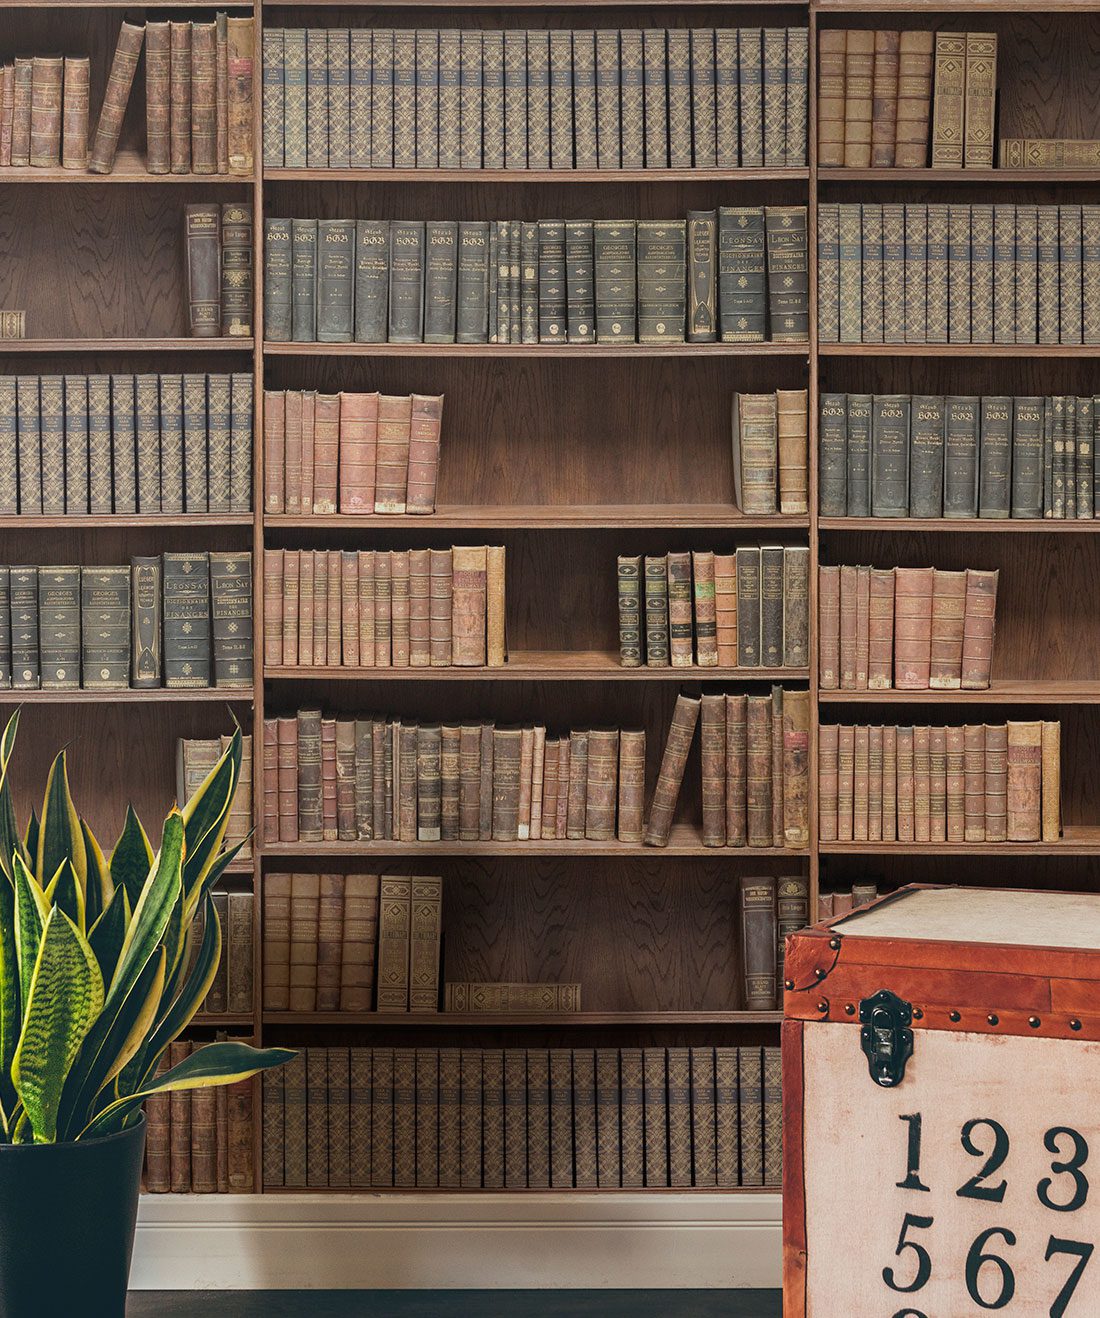 Bookshelf Wallpaper Realistic Library Design Milton King